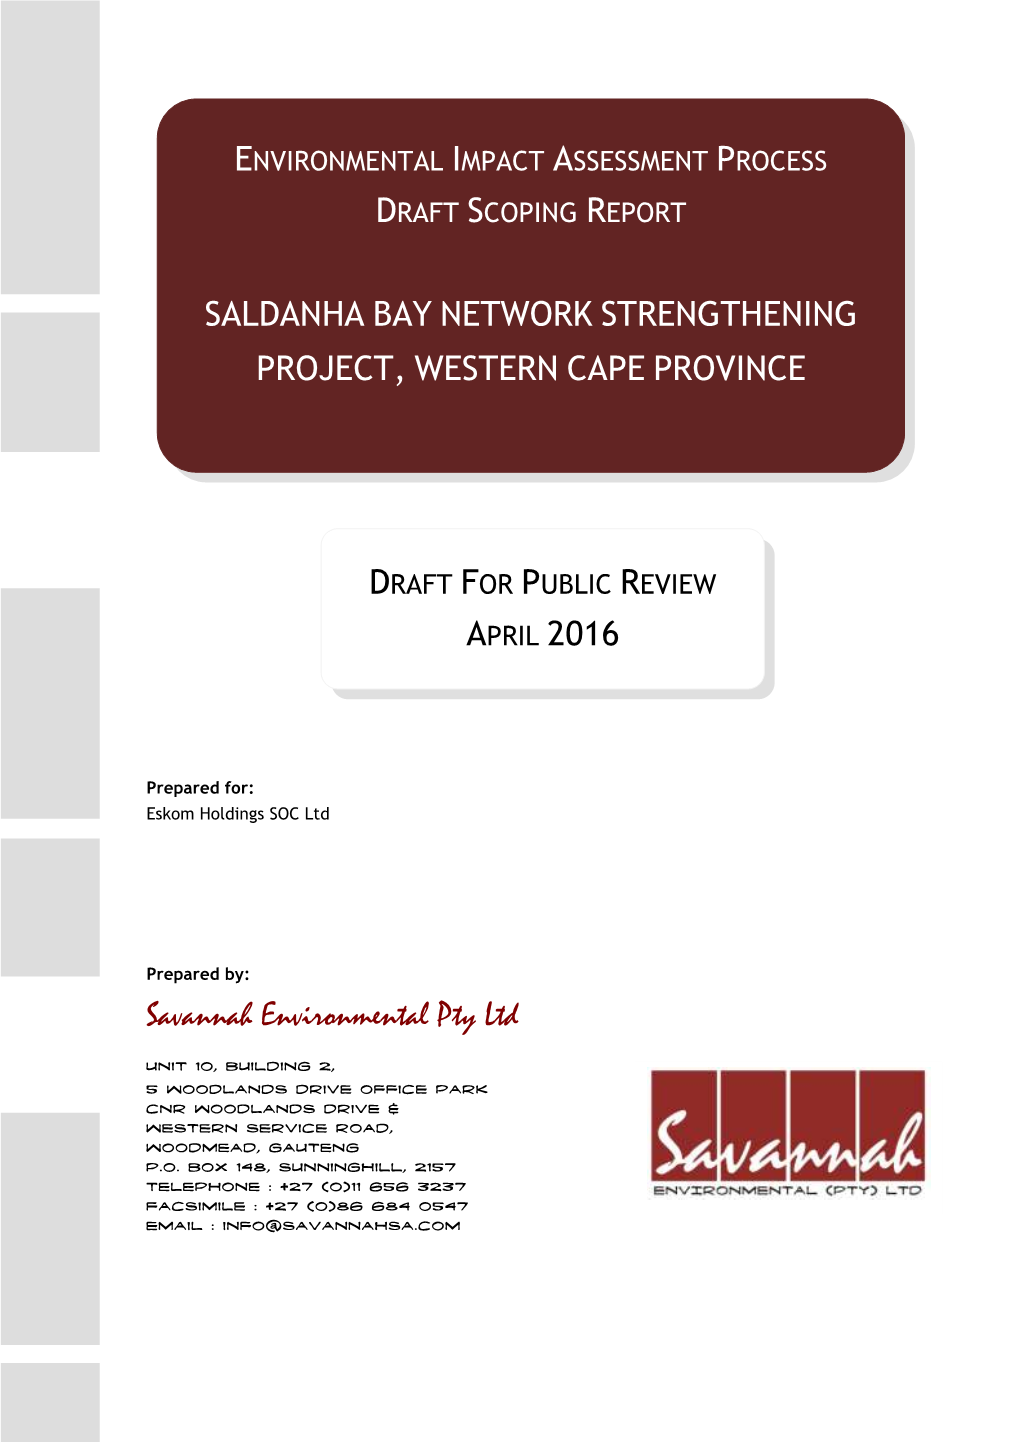 Saldanha Bay Network Strengthening Project, Western Cape Province